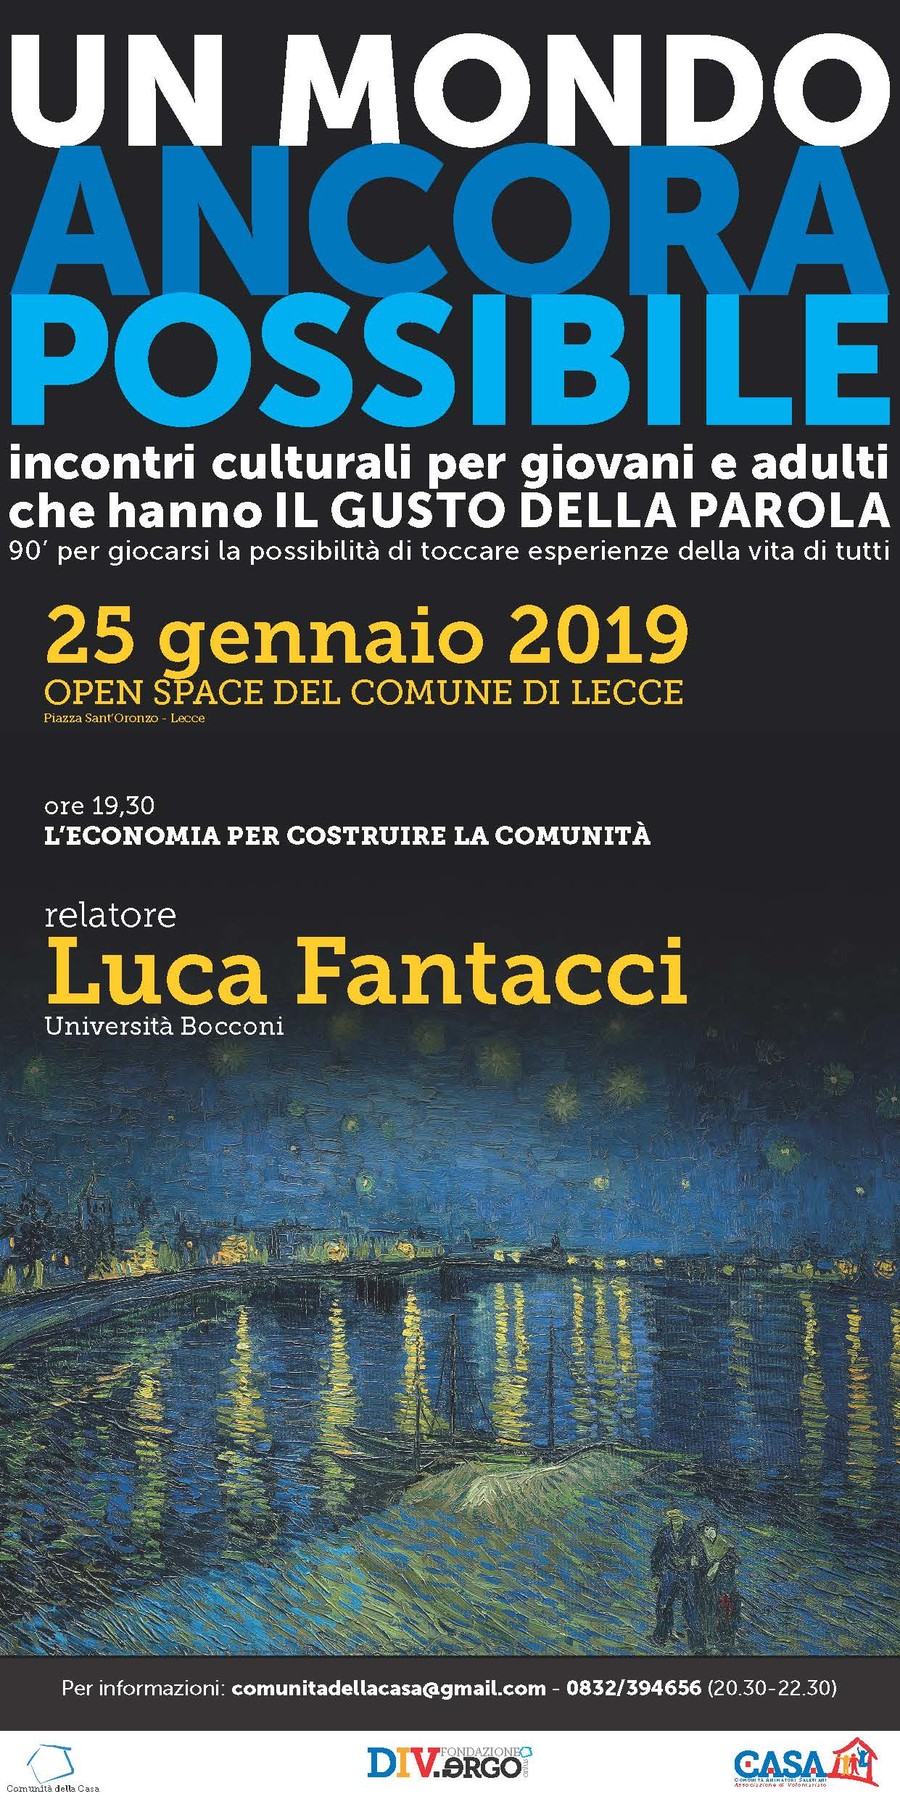 LucaFantacci